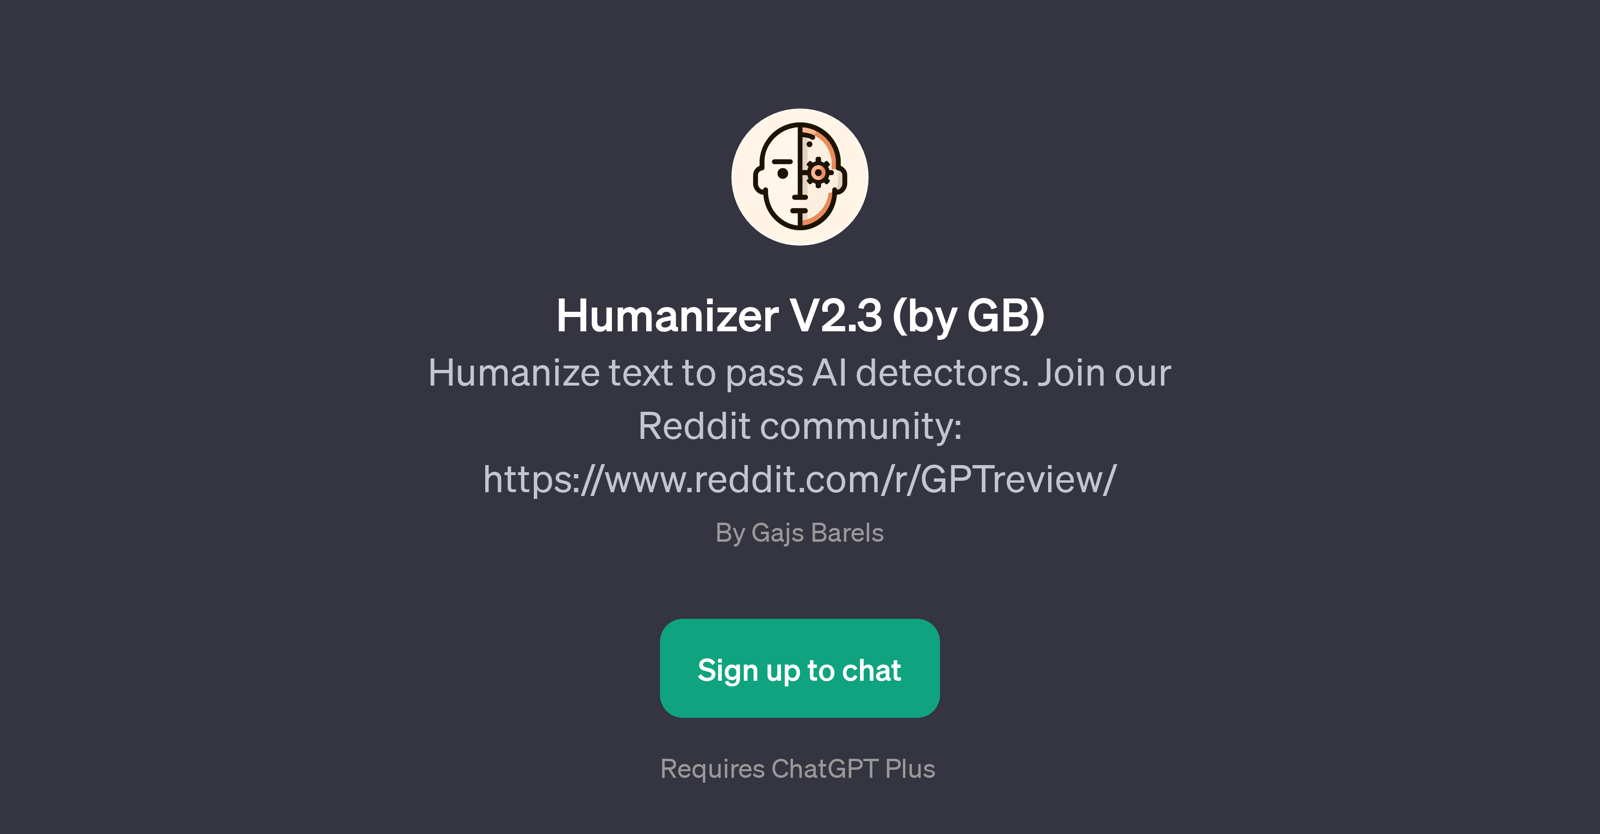 Humanizer V2.3 (by GB) website